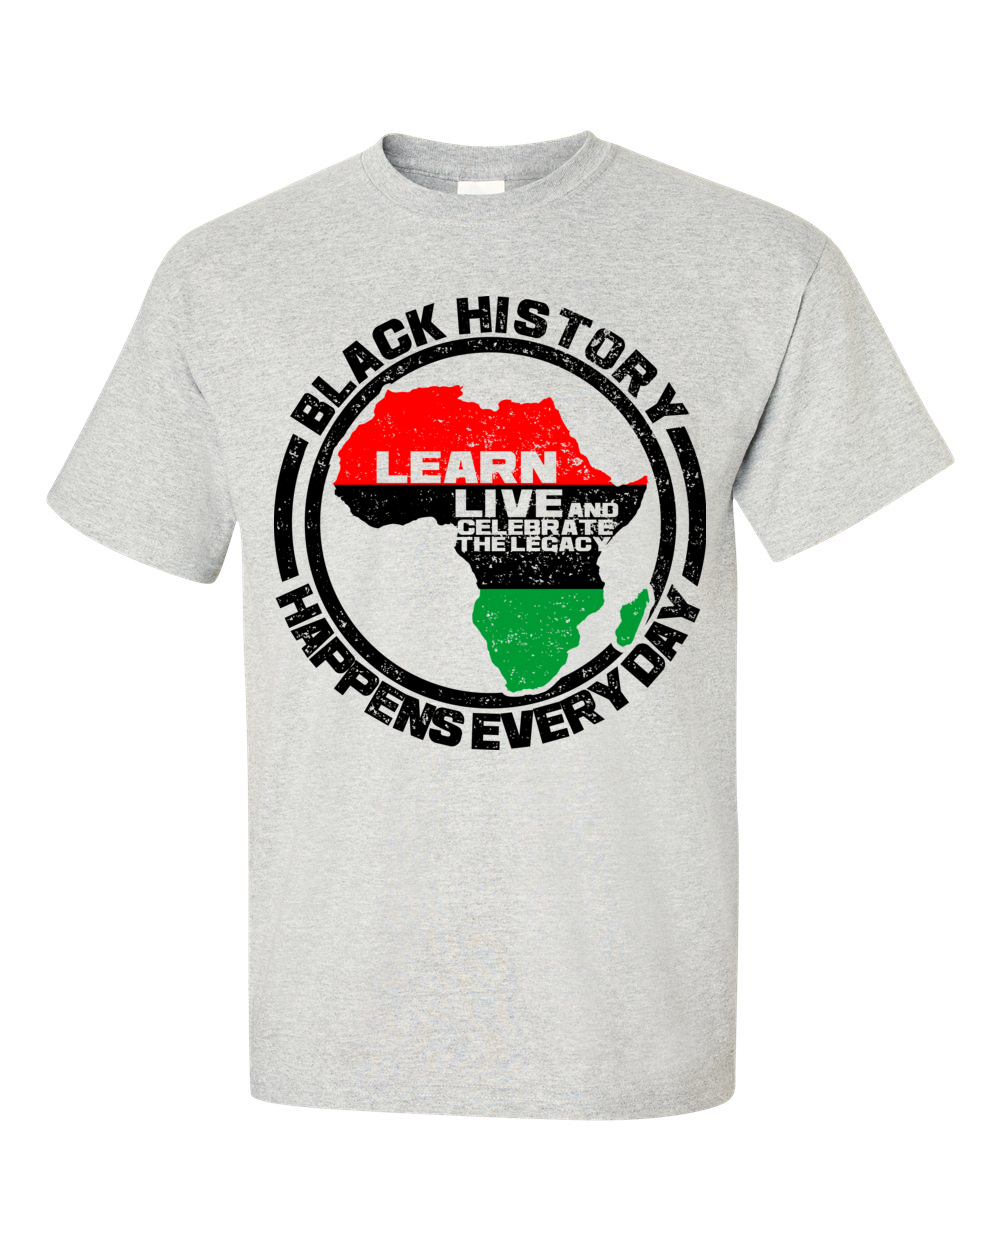 3 of 6: Black History Happens Everyday Short Sleeve Unisex T-Shirt-T-Shirt-RBG Forever-Small-Ash-The Black Art Depot